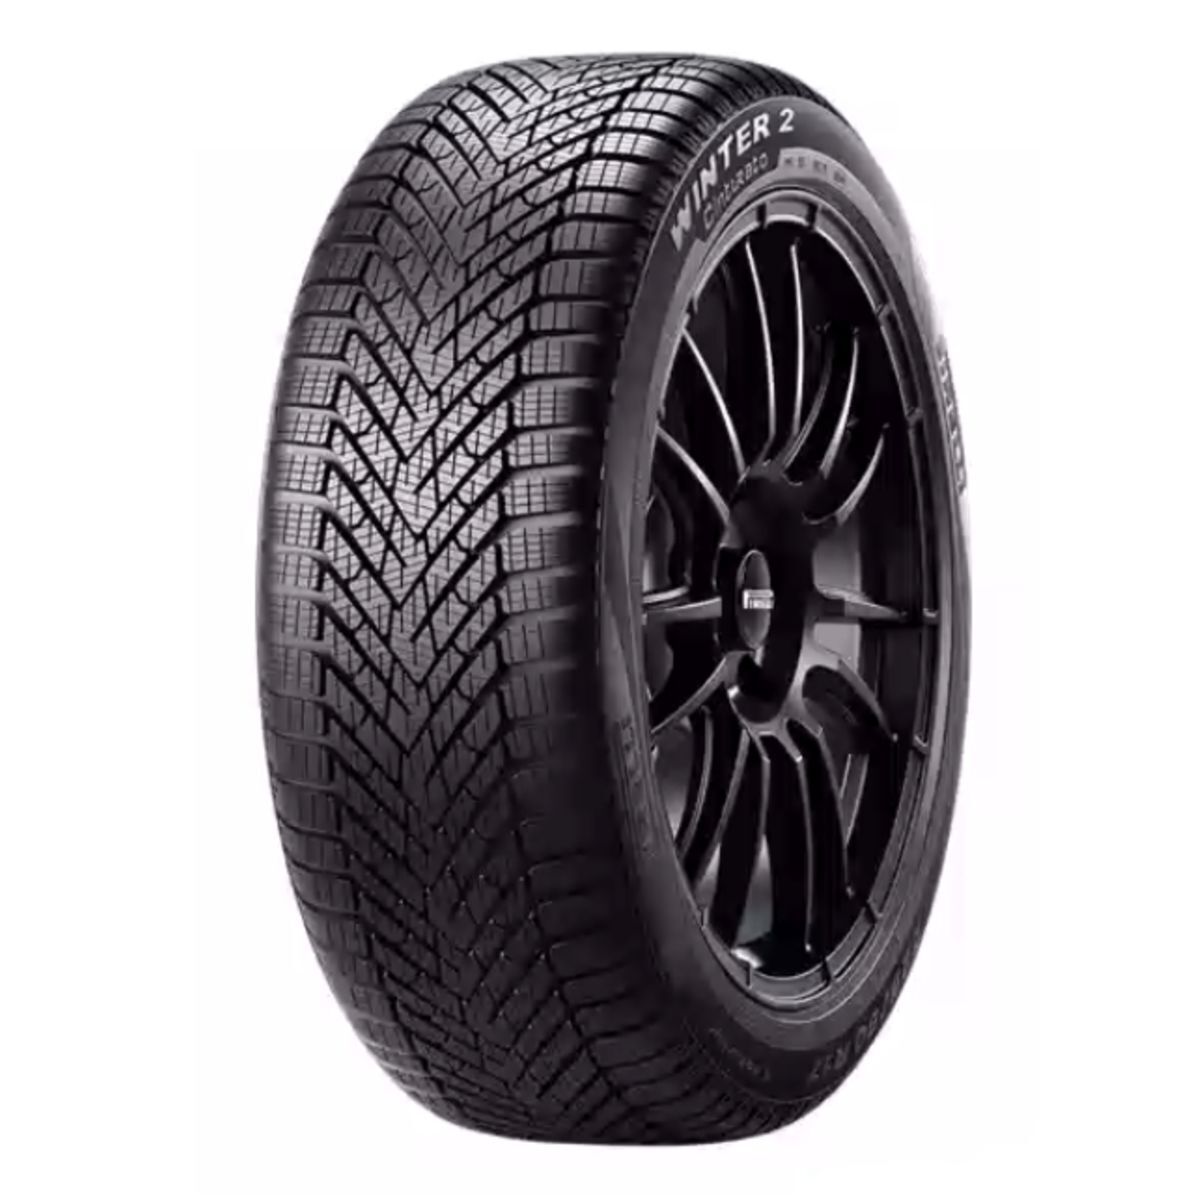 Neumáticos de invierno PIRELLI Cinturato Winter 2 215/55R17 XL 98V